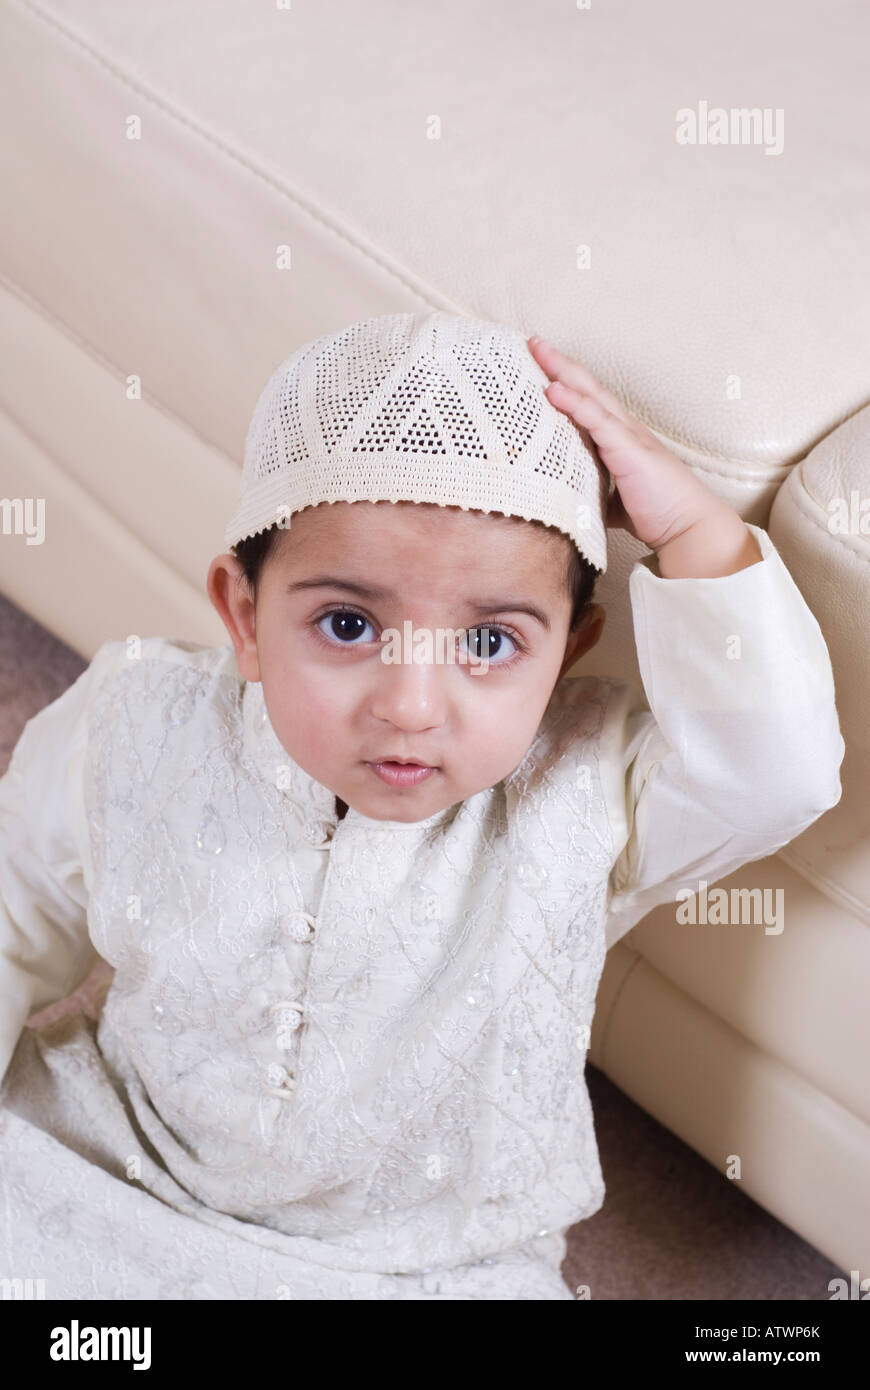 Muslim 1 year old baby hand on head wearing traditional Islamic ...